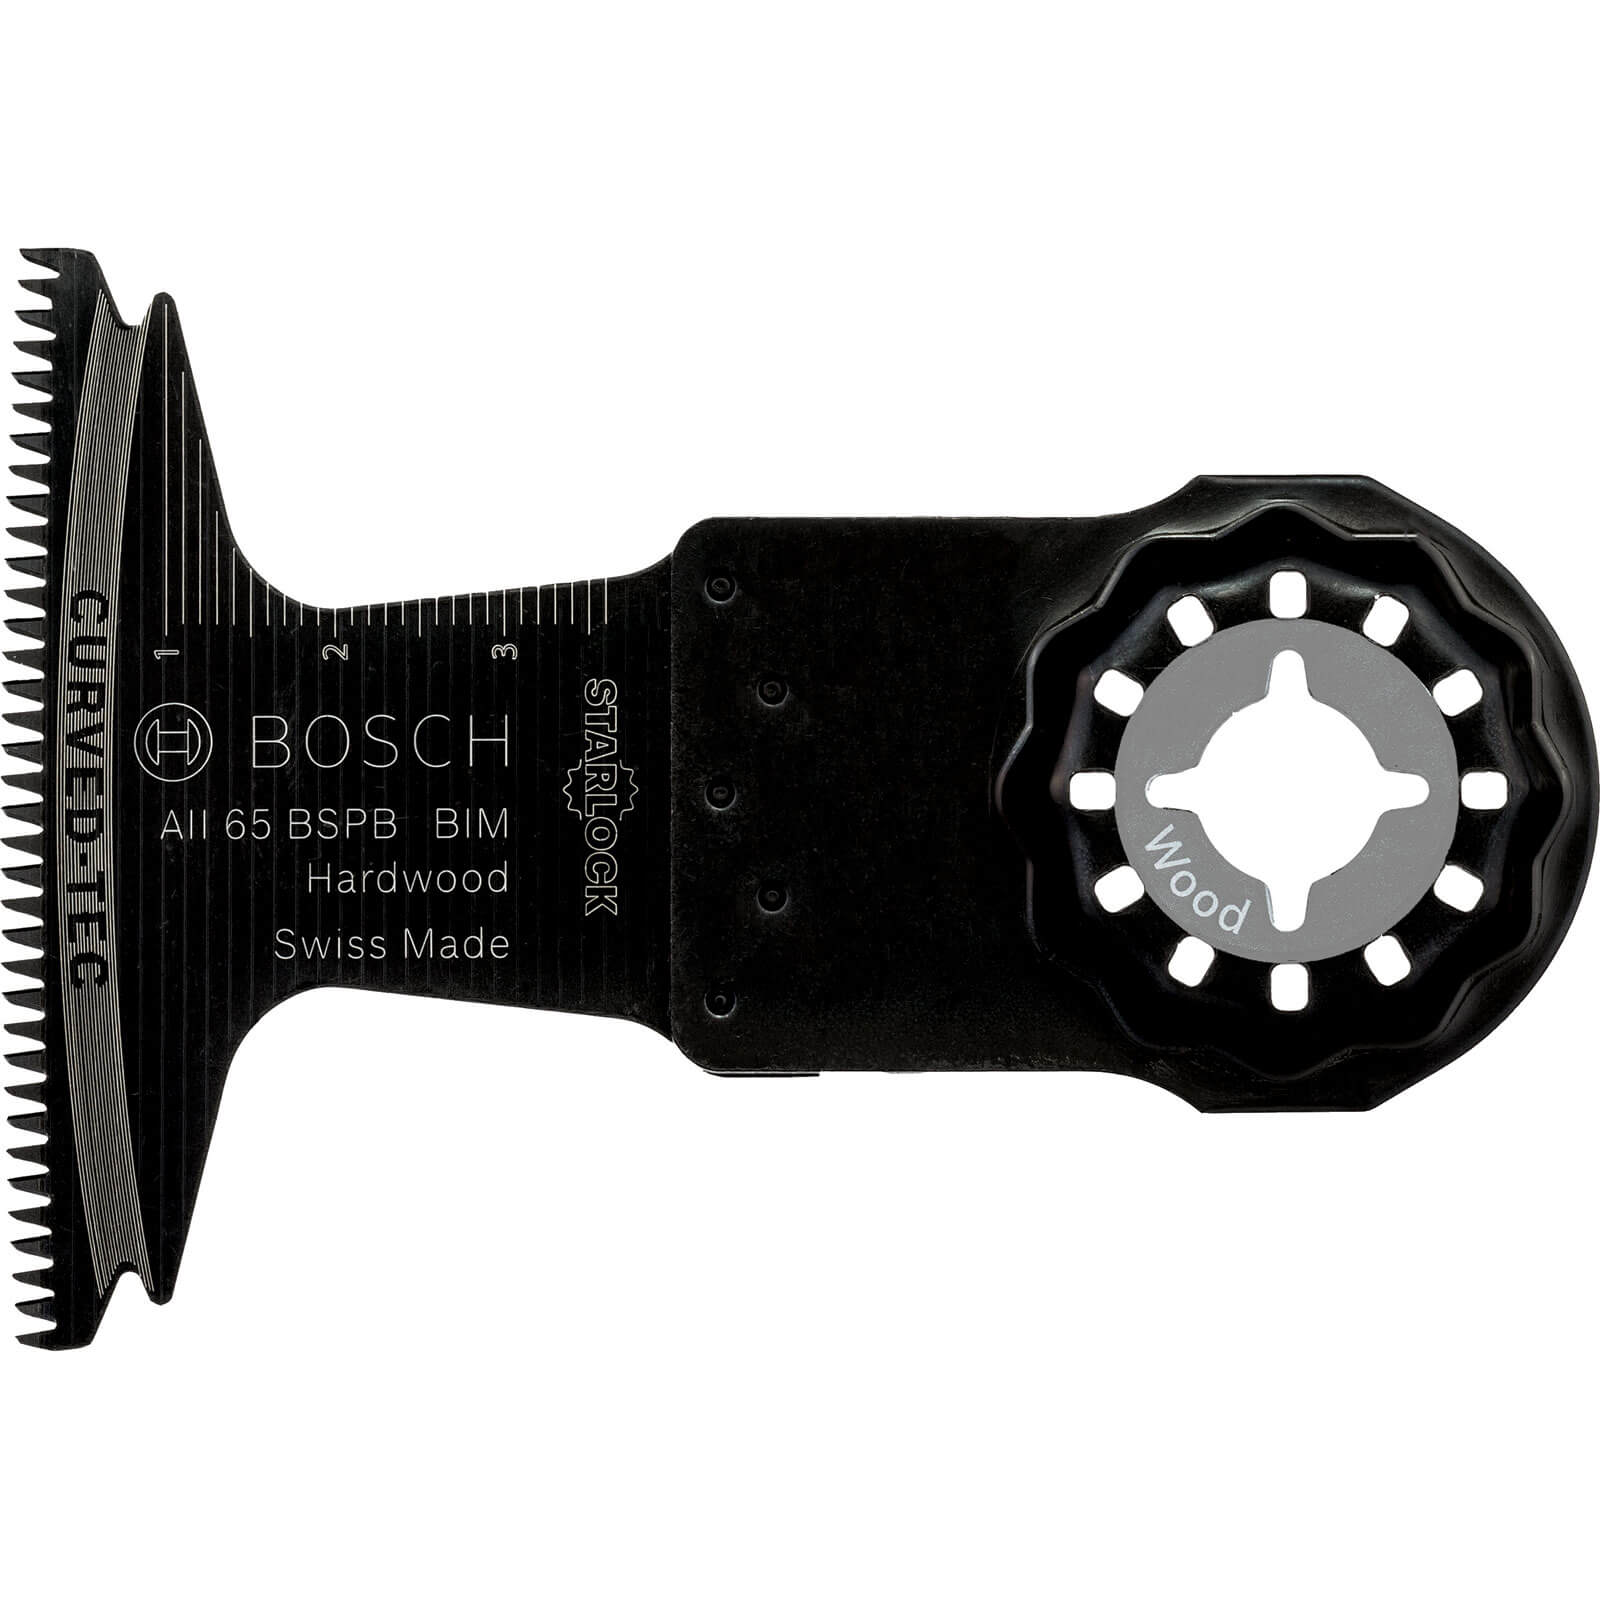 Photo of Bosch Aii 65 Bspb Hard Wood Starlock Oscillating Multi Tool Plunge Saw Blade 65mm Pack Of 1